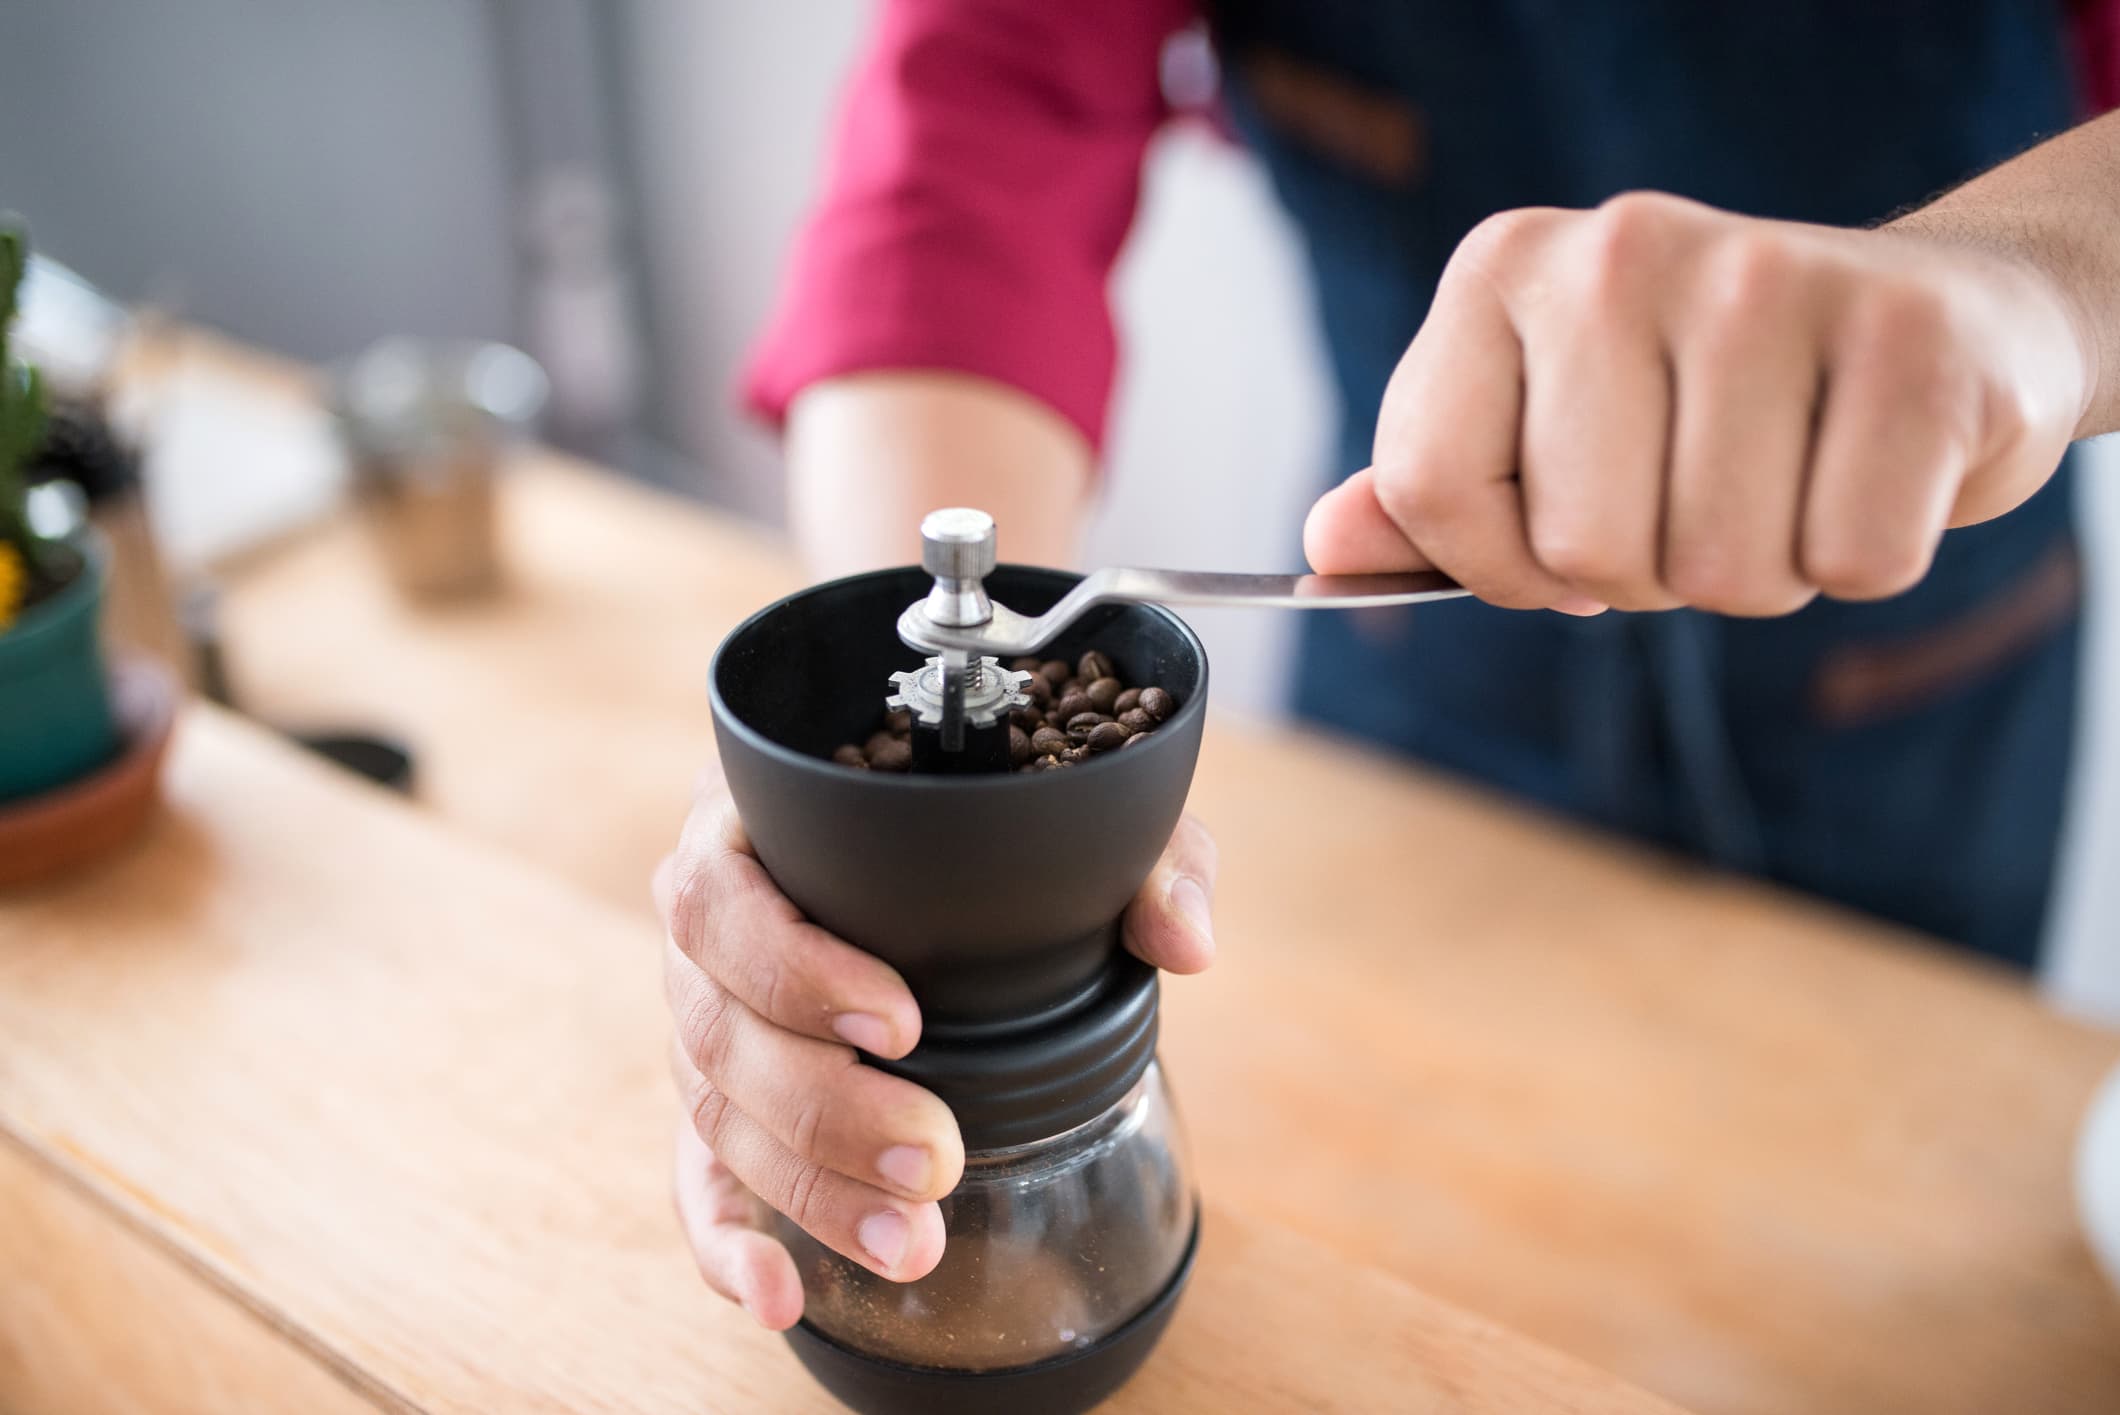 Urnex Grindz: Simple Steps to a Cleaner Coffee Grinder